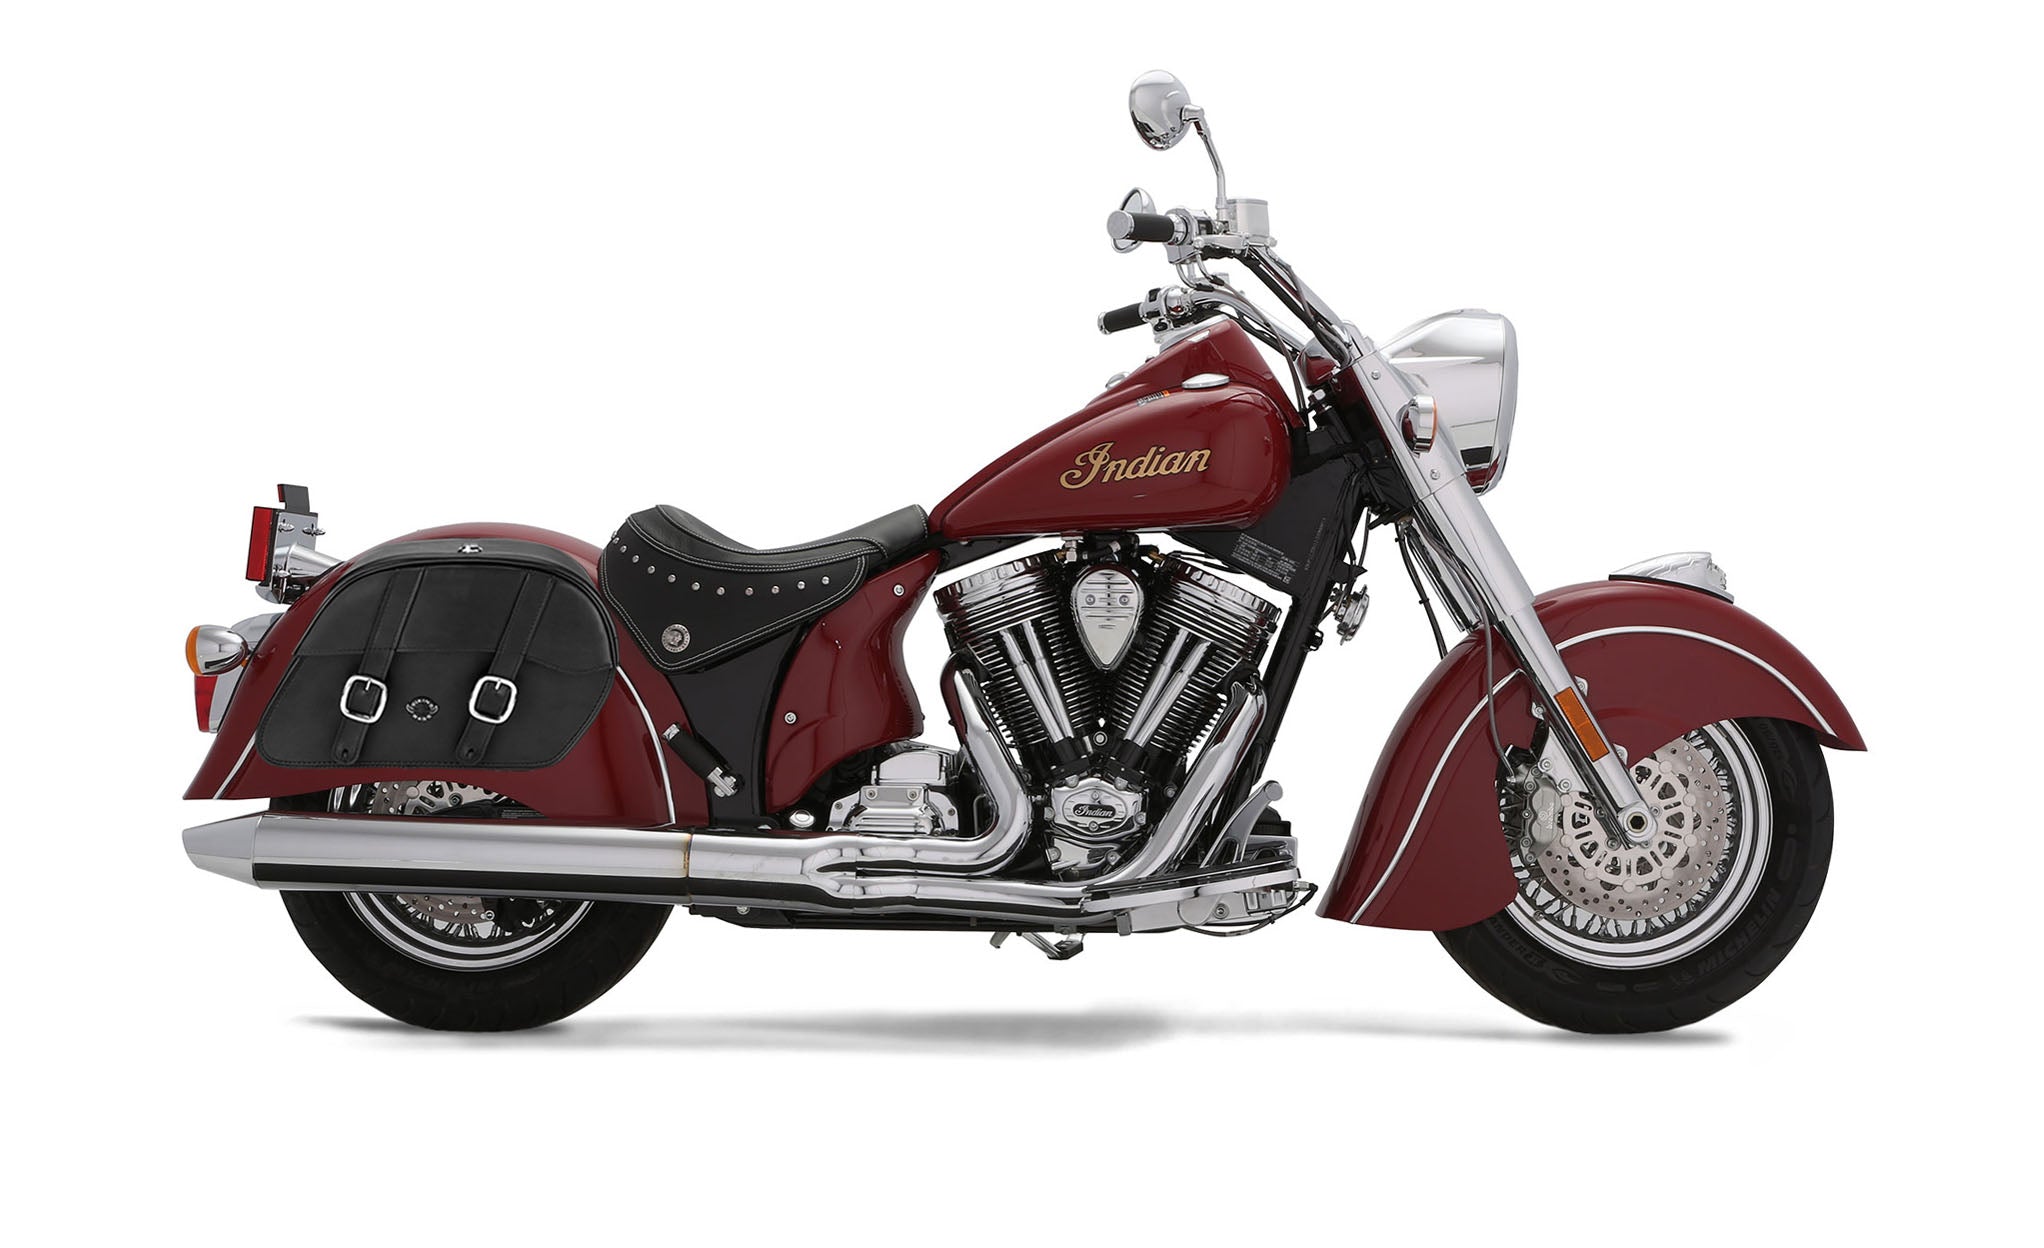 Viking Skarner Medium Lockable Indian Chief Deluxe Leather Motorcycle Saddlebags on Bike Photo @expand